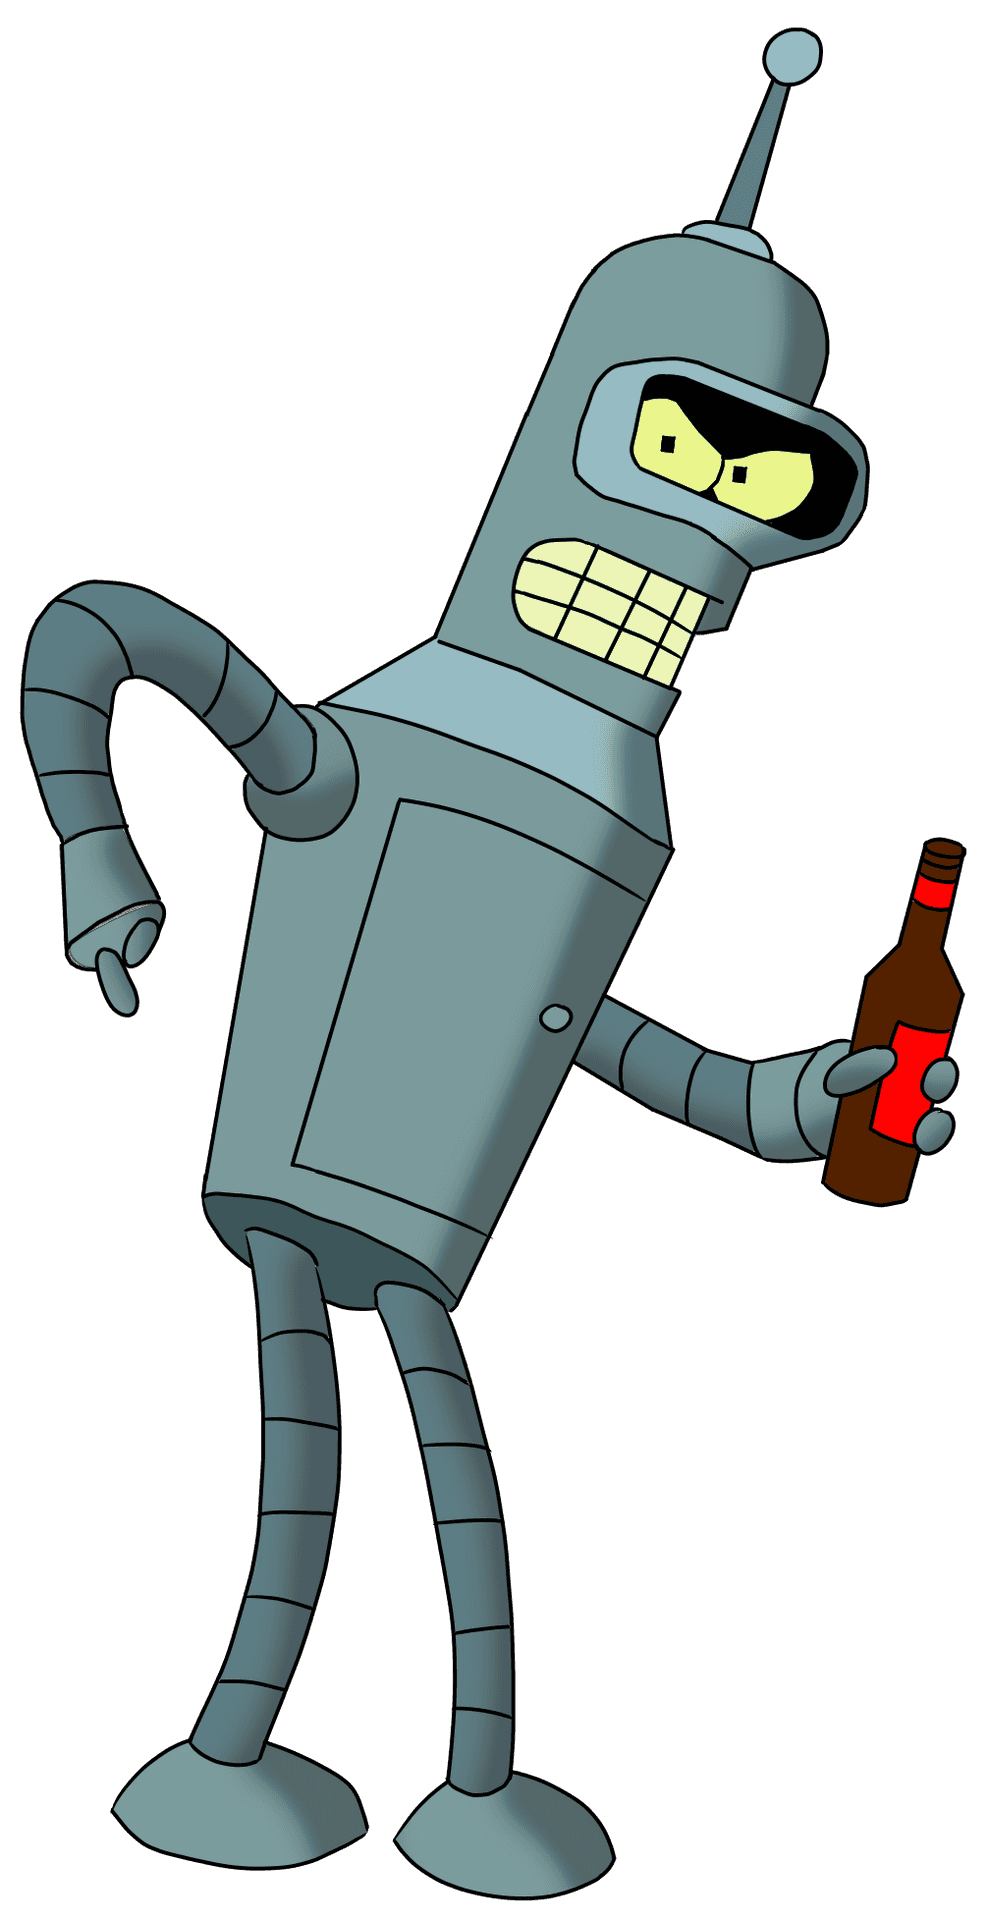 Futurama's Favorite Mascot: Bender The Robot In Space